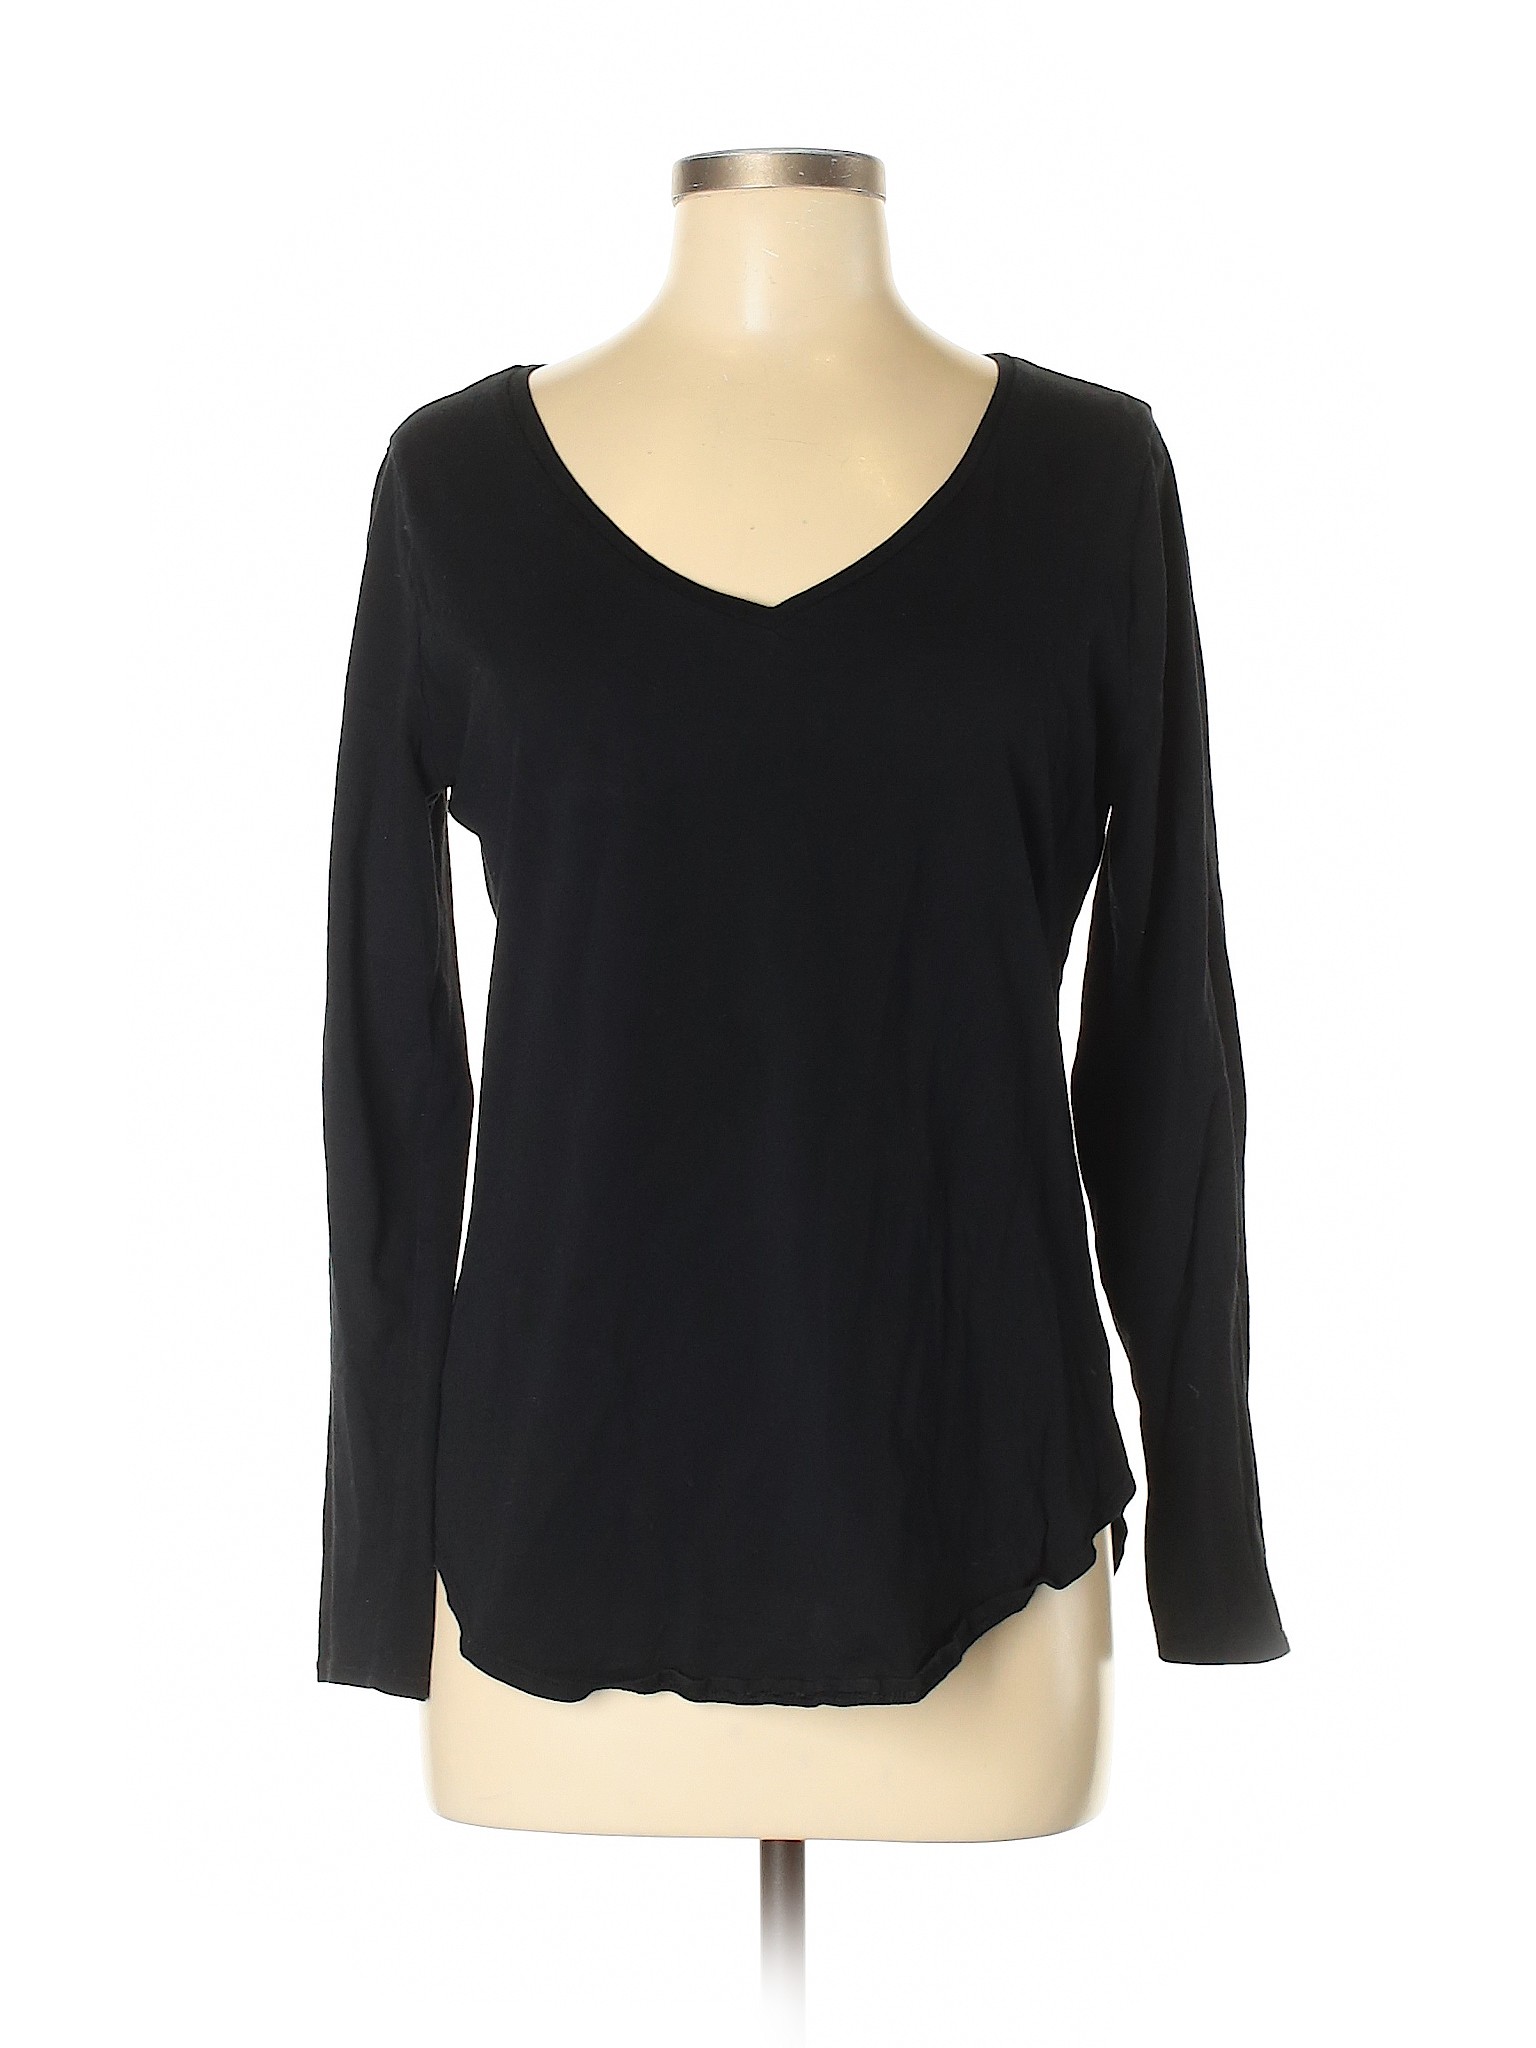 Old Navy Women Black Long Sleeve T-Shirt M | eBay